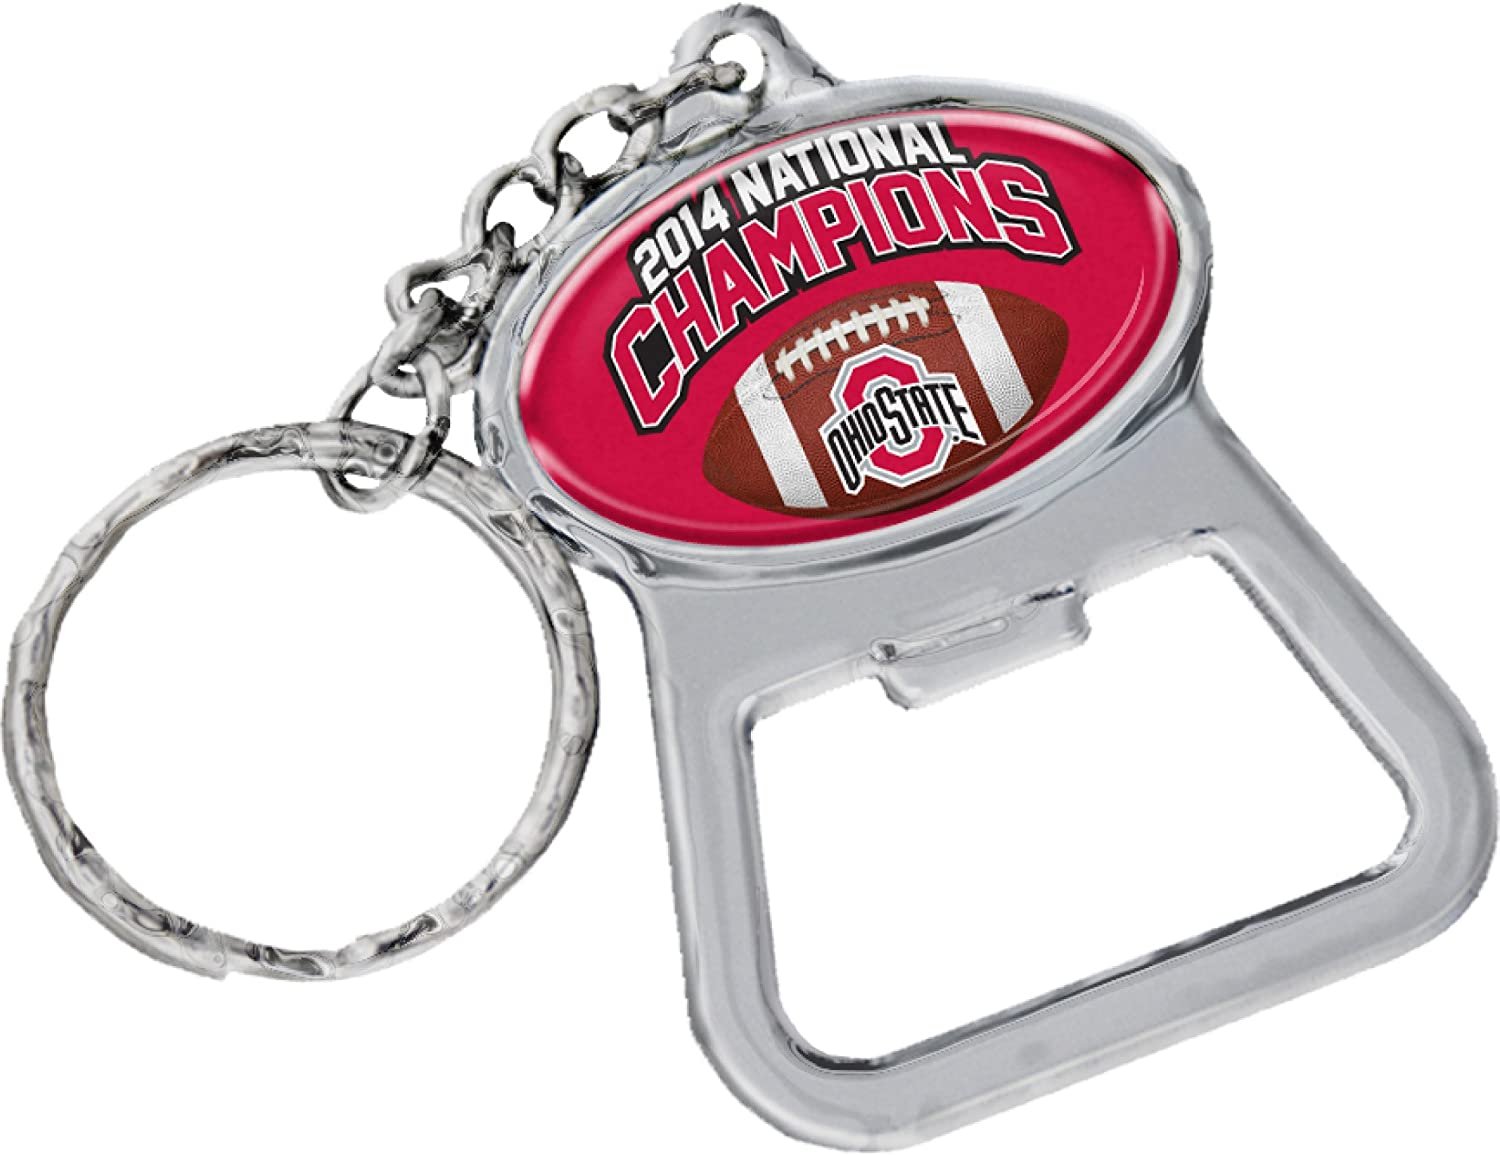 Ohio State Buckeyes 2014 Championship Bottle Opener Keychain Key Chain University